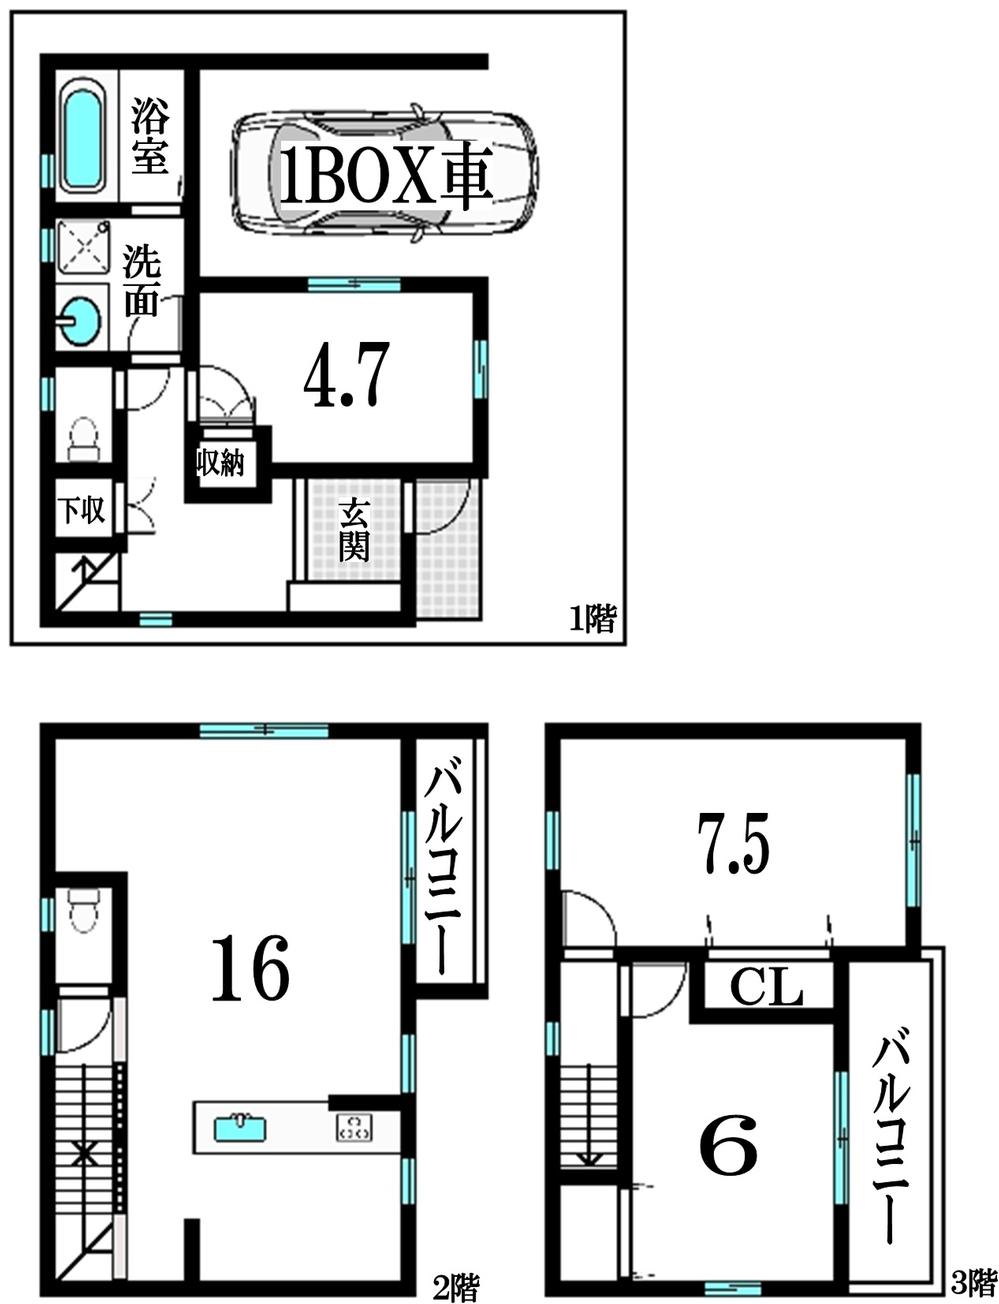 Floor plan. (No. 3 locations), Price 32,800,000 yen, 3LDK, Land area 59.12 sq m , Building area 82.83 sq m